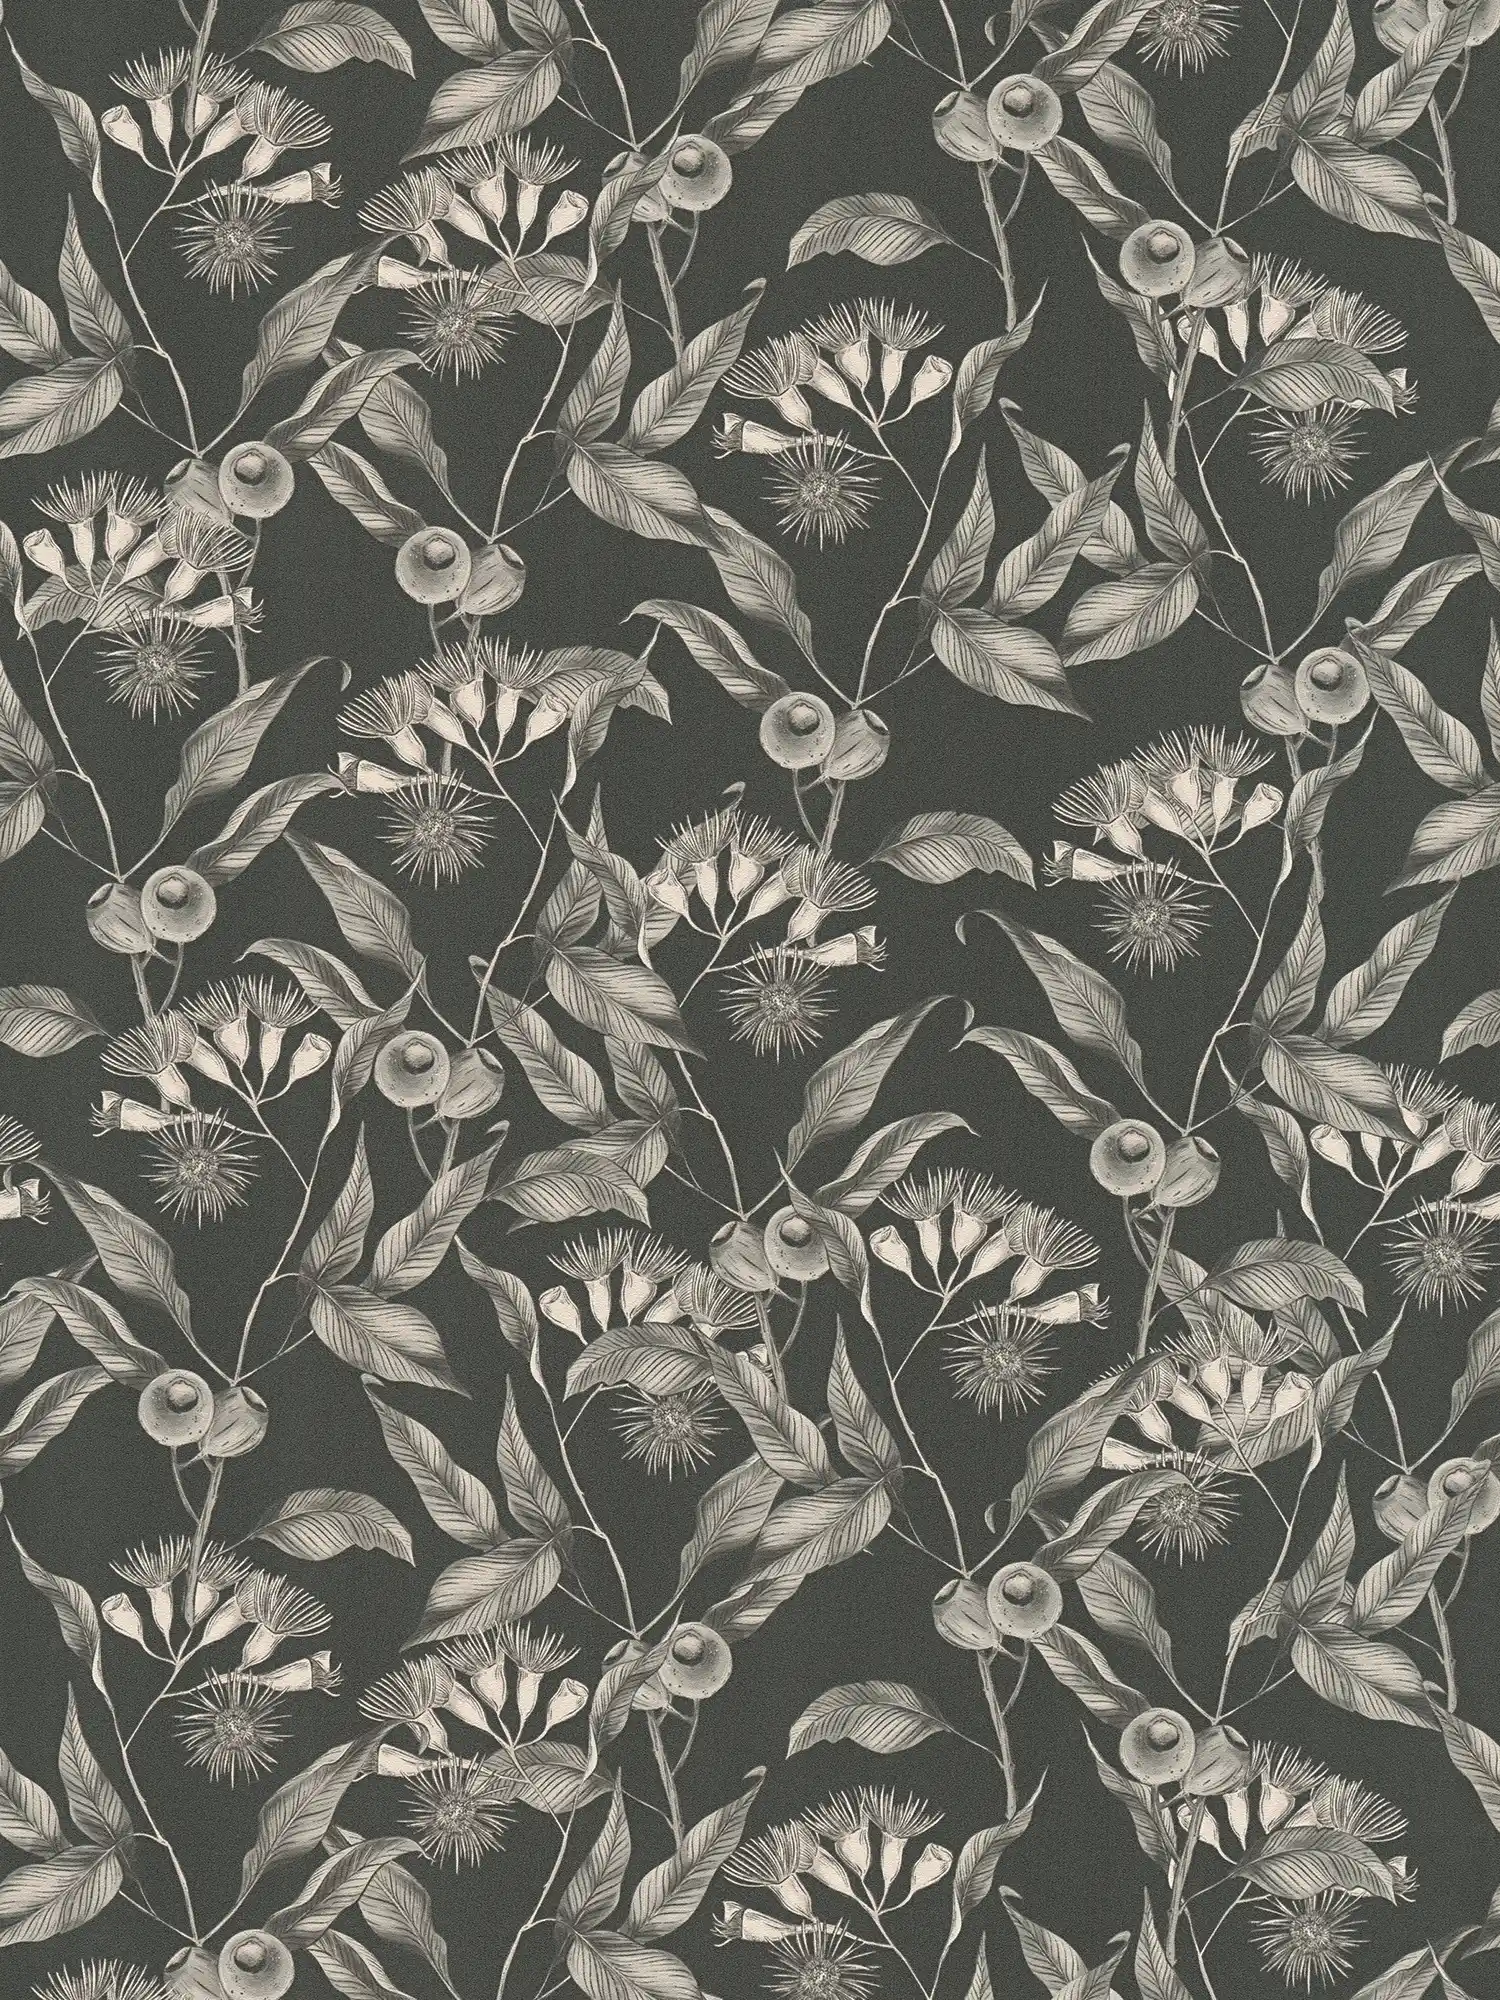 Modern wallpaper floral with leaves & flowers textured matt - black, white, grey
